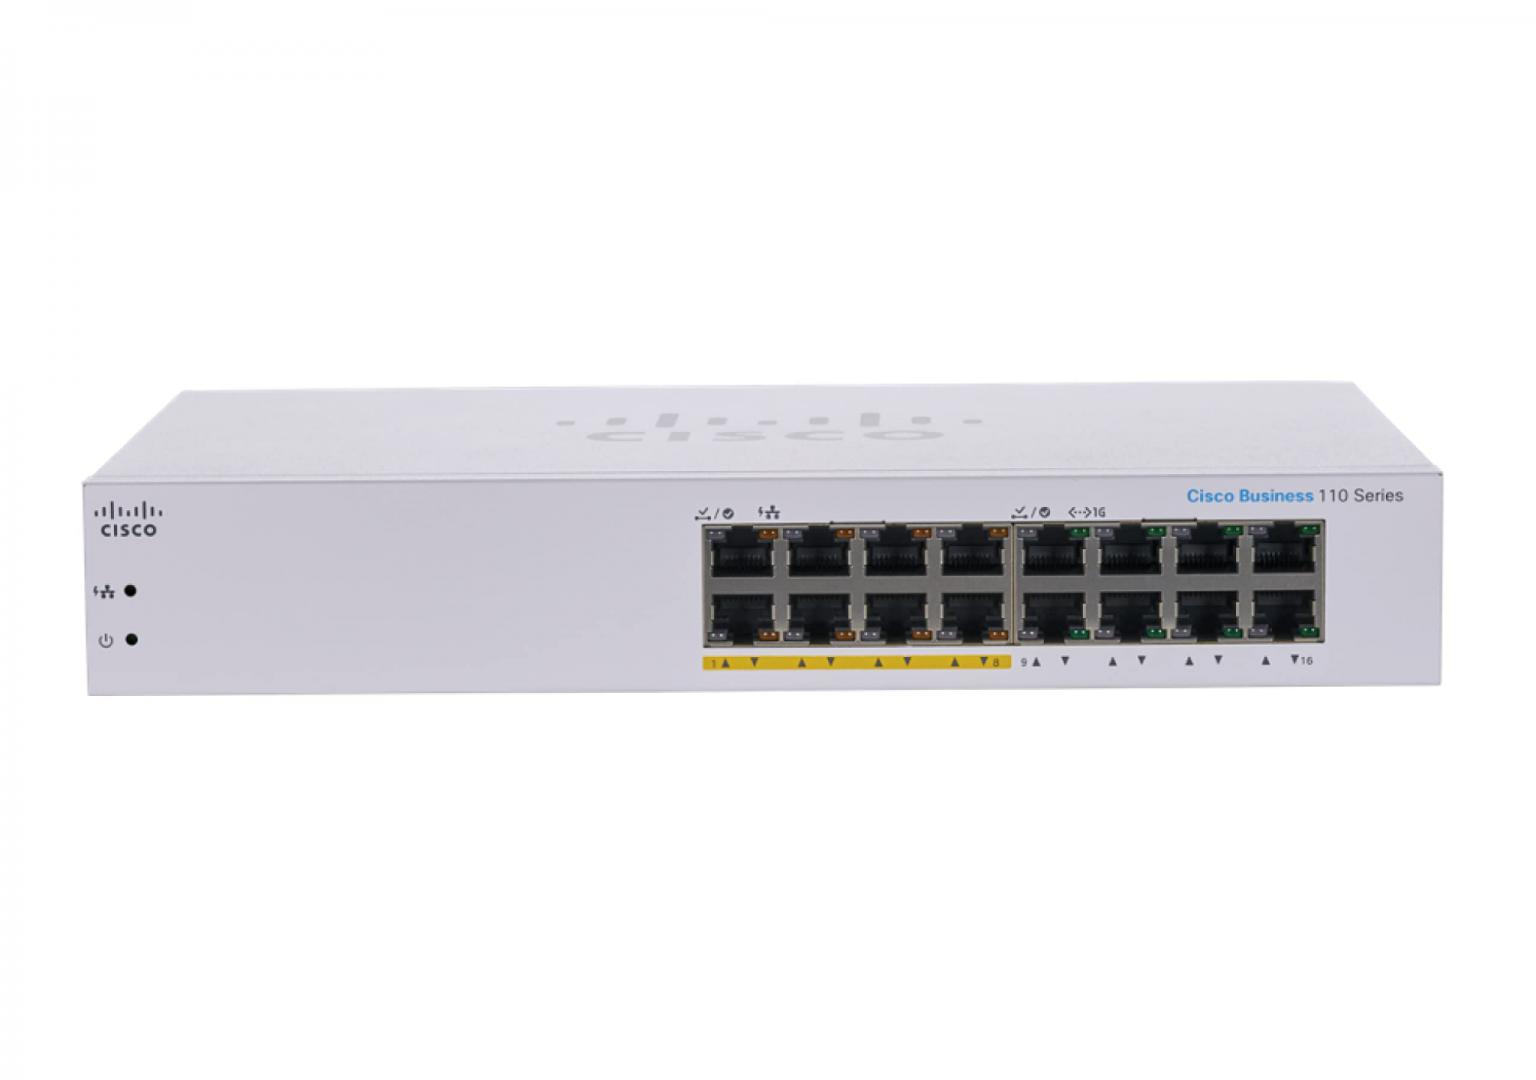 Switch  CISCO CBS110-16PP , 16 porturi 10/100/1000, Buget 8 x POE - 64W, Flash: 16mb, CPU: 400 MHz, dimensiuni: 279 x 170 x 44 mm, 1.3 Kg, consum: 220V=11.41W, Fanless, Montare in rack.